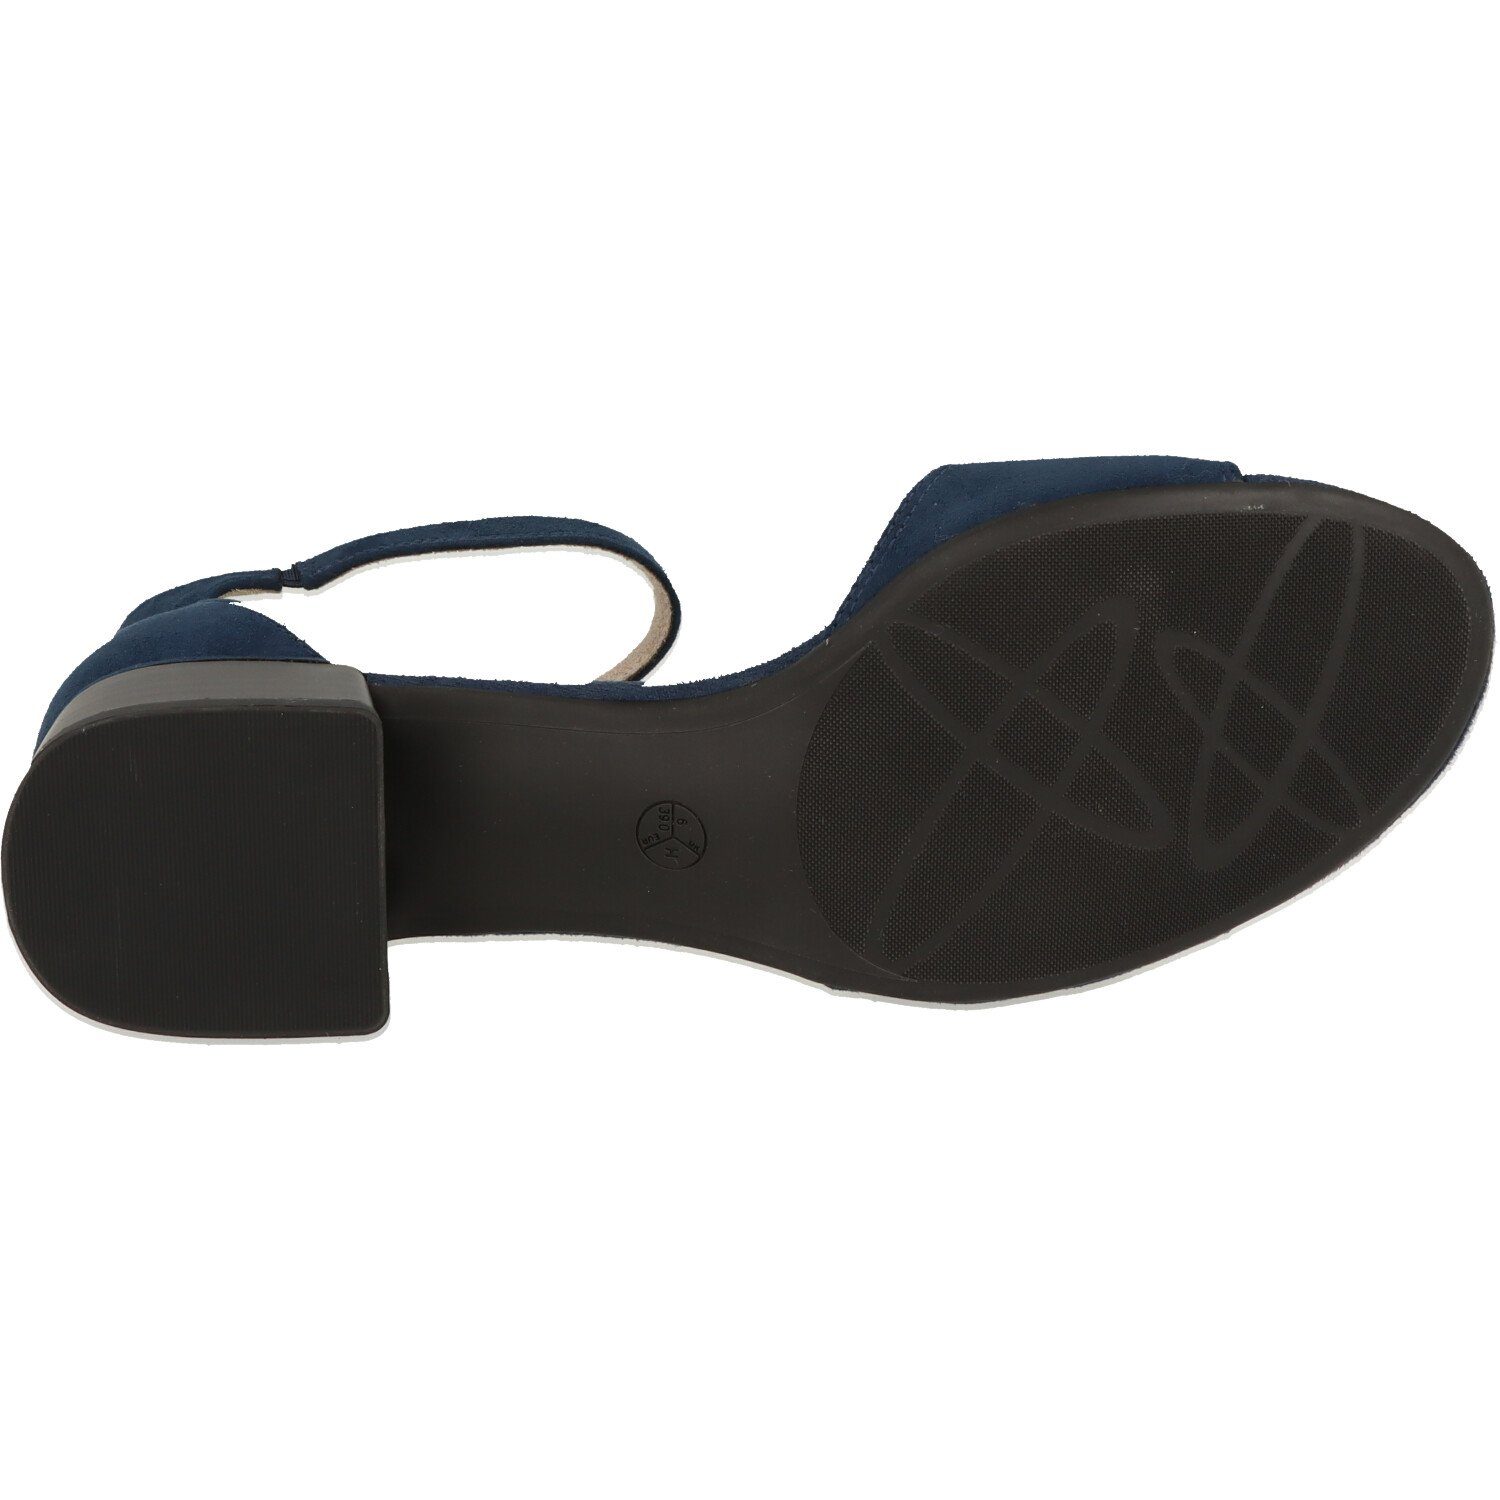 Jana Damen Schuhe Sandalette Navy Absatzsandalen Komfort H-Weite 8-28261-20